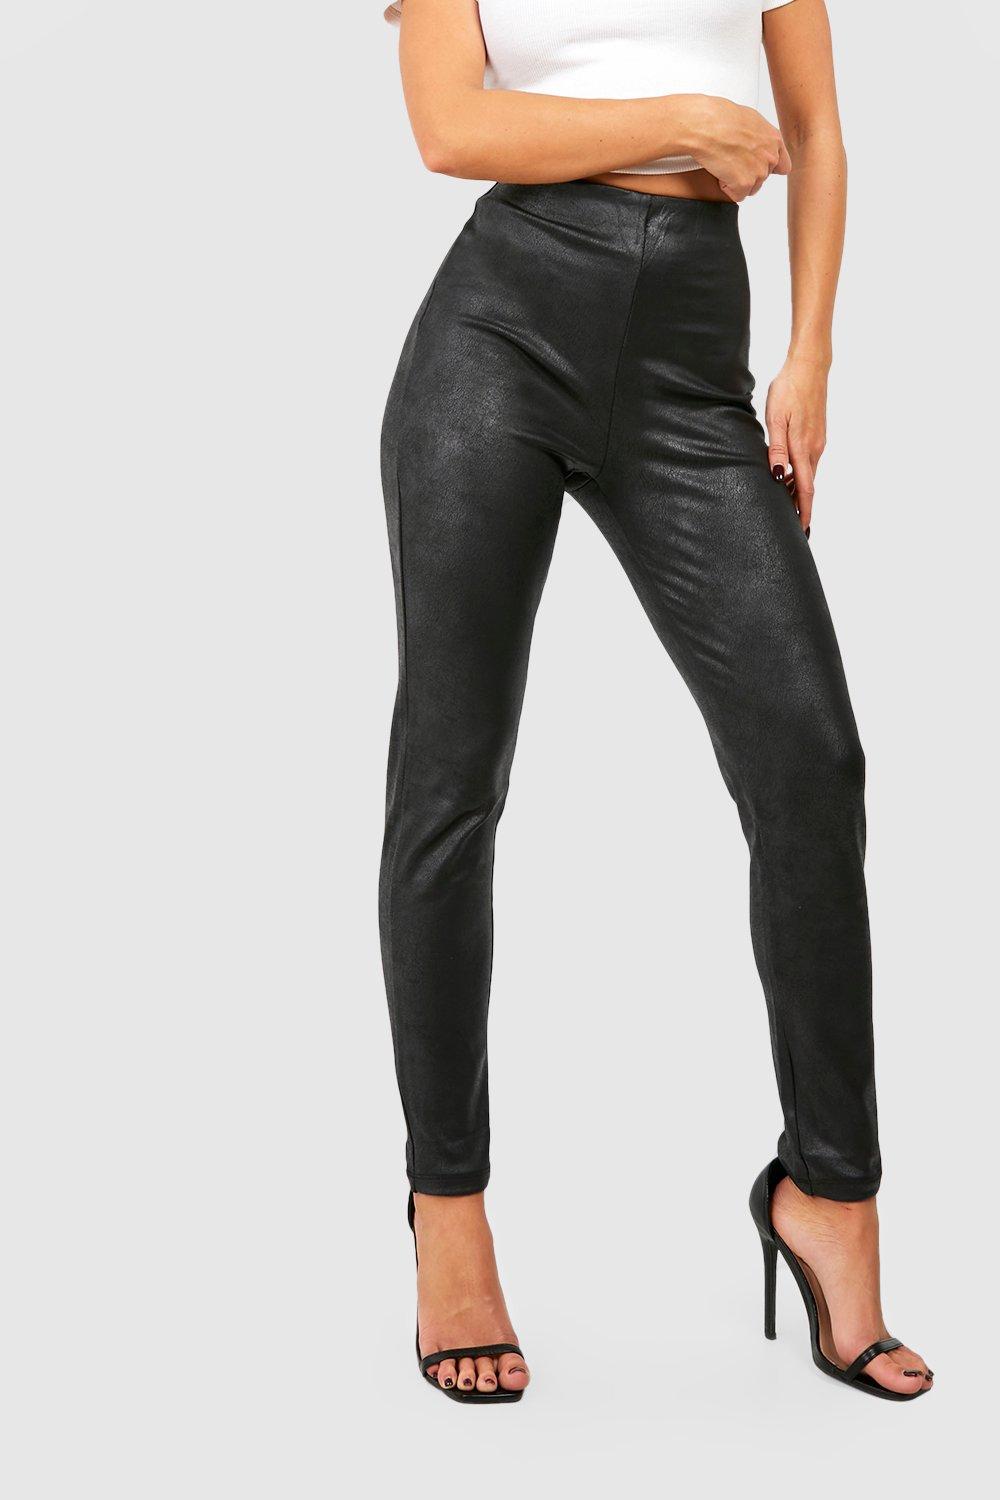 https://media.boohoo.com/i/boohoo/gzz70947_black_xl_3/female-black-faux-leather-high-waisted-legging